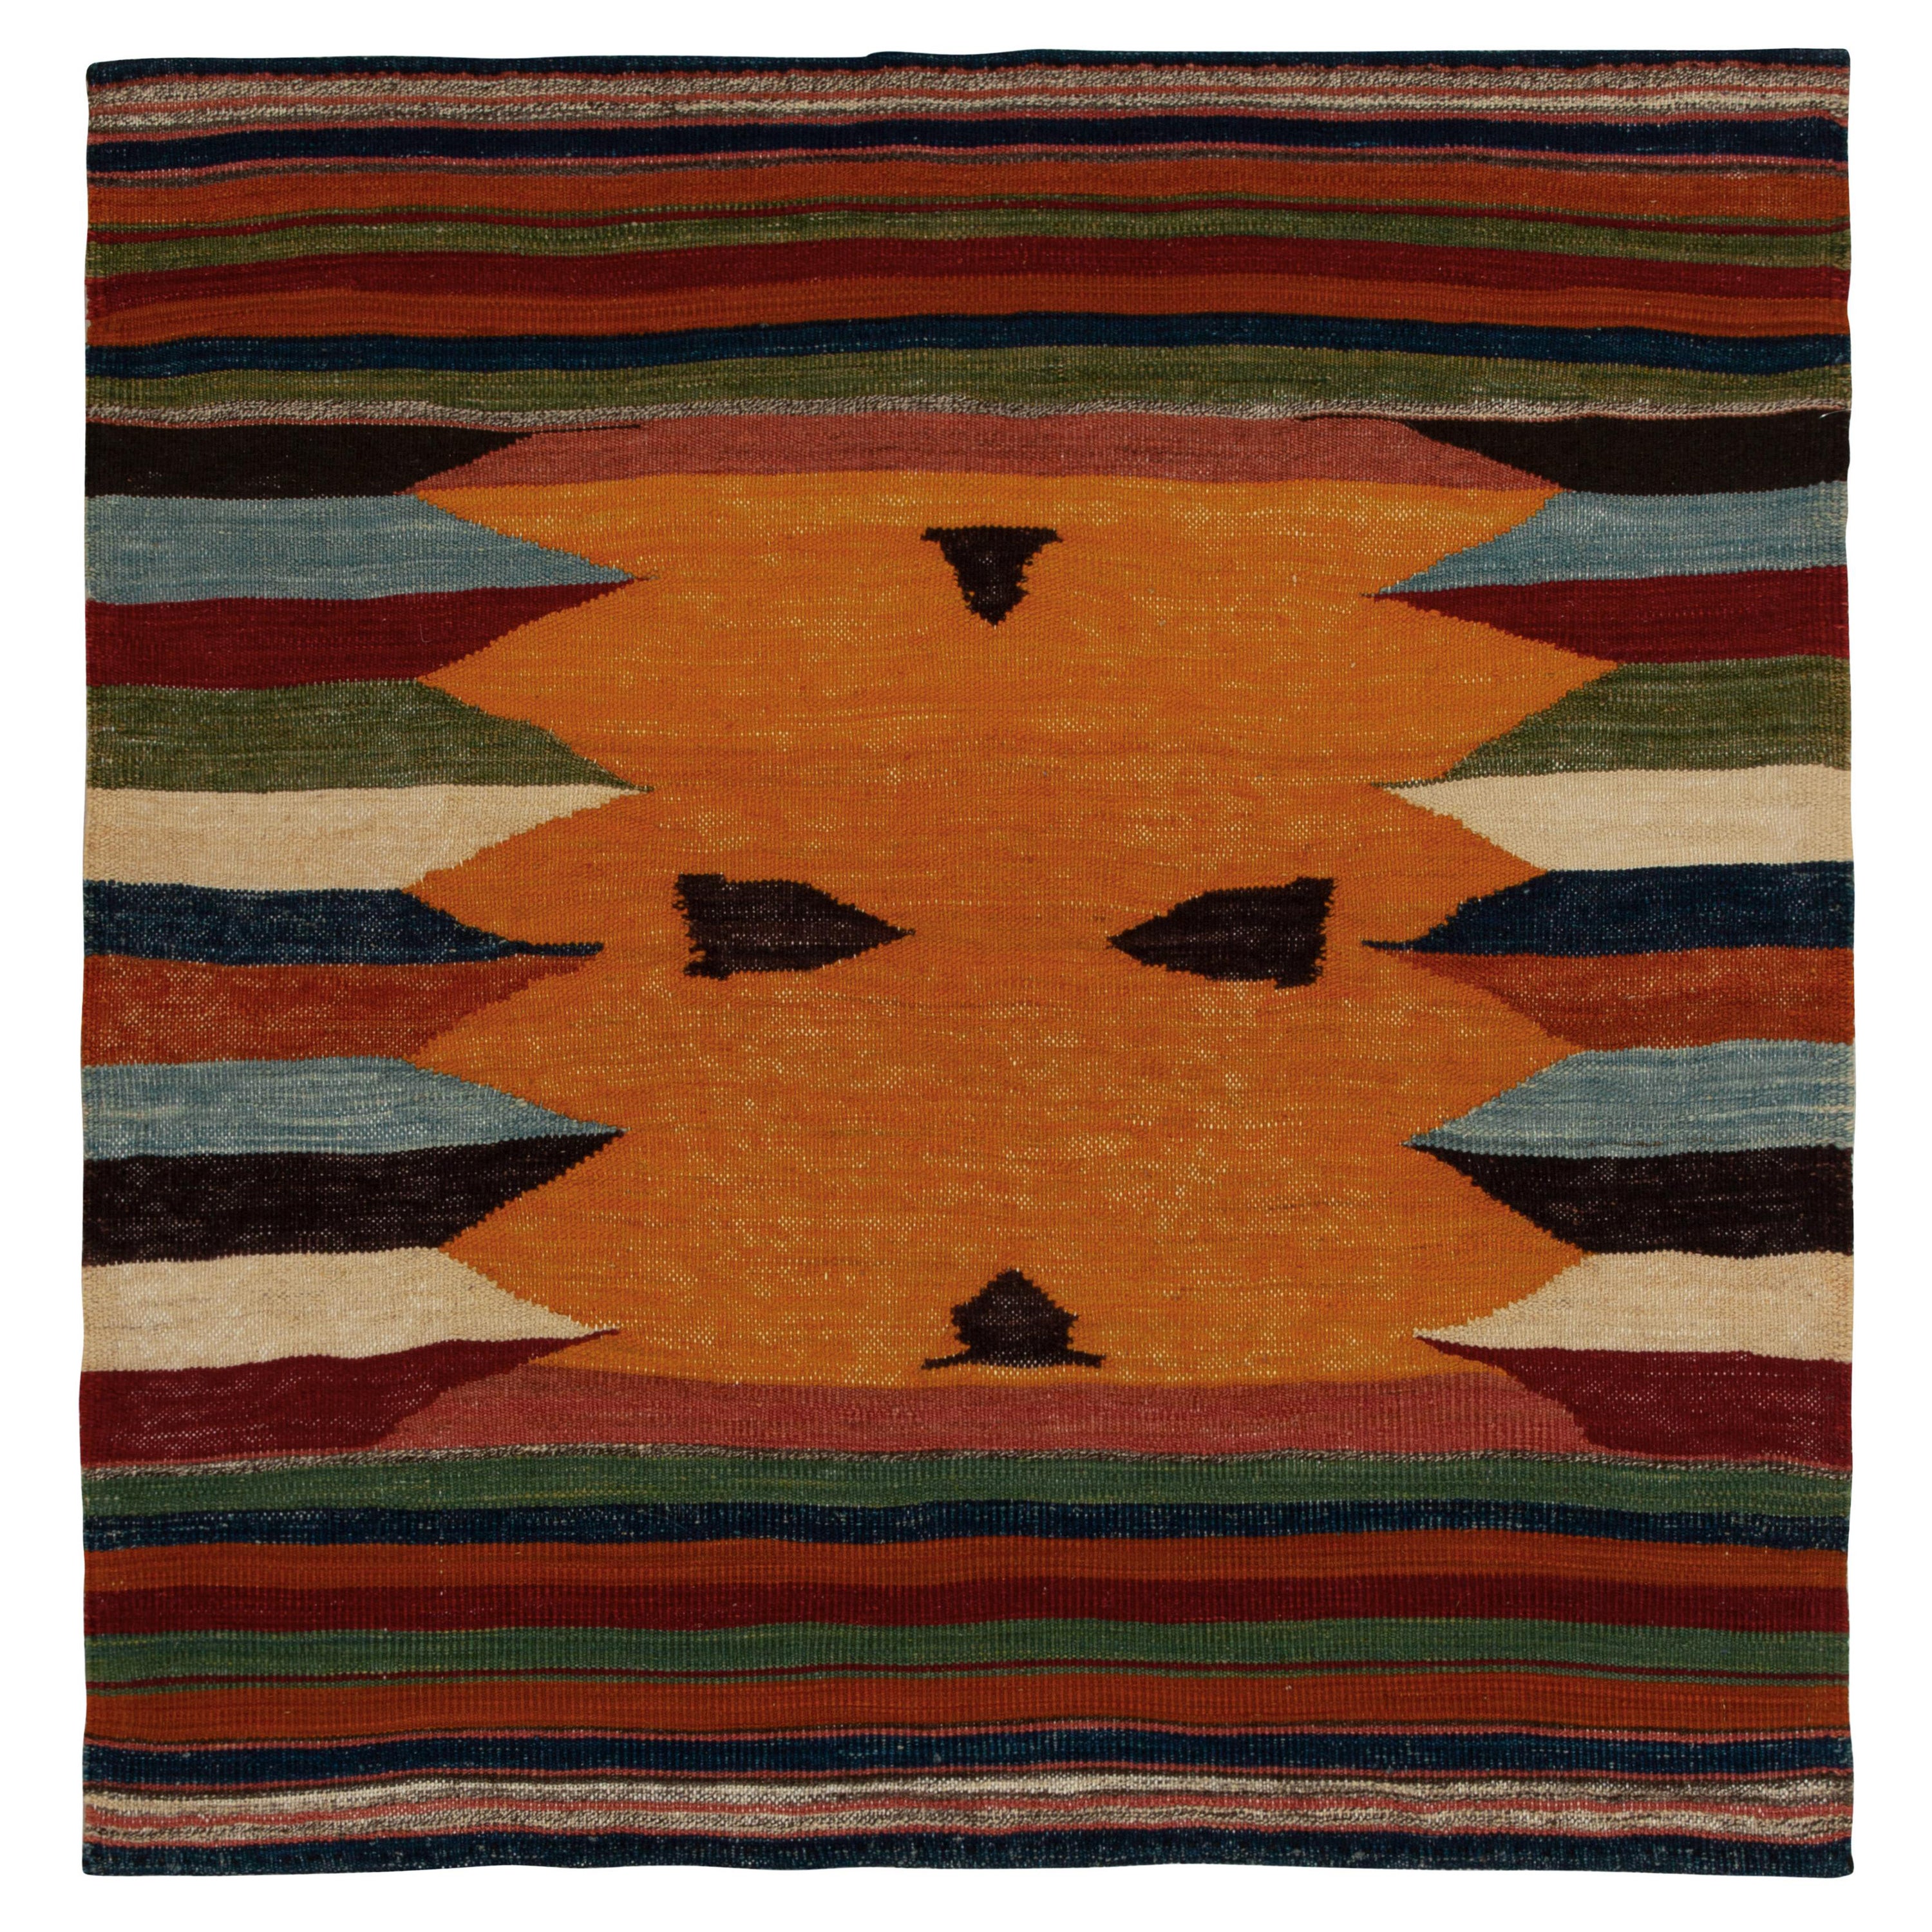 1980s Vintage Sofreh Kilim Rug in Orange Tribal Stripe Patterns by Rug & Kilim For Sale